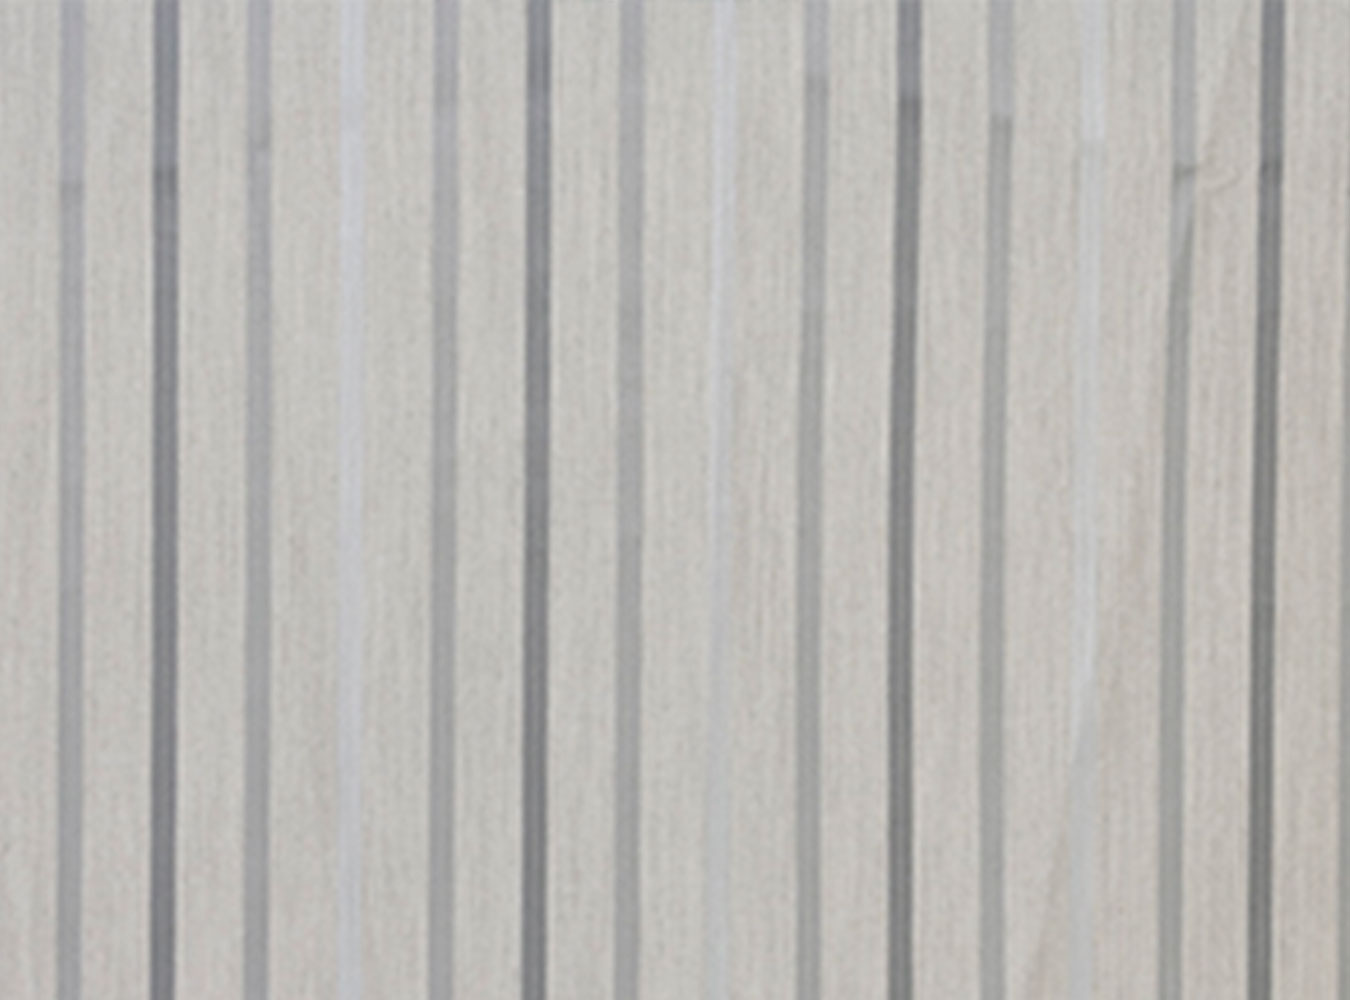 Laura Ashley Luxford Stripe Dove Grey - Swatch Sample